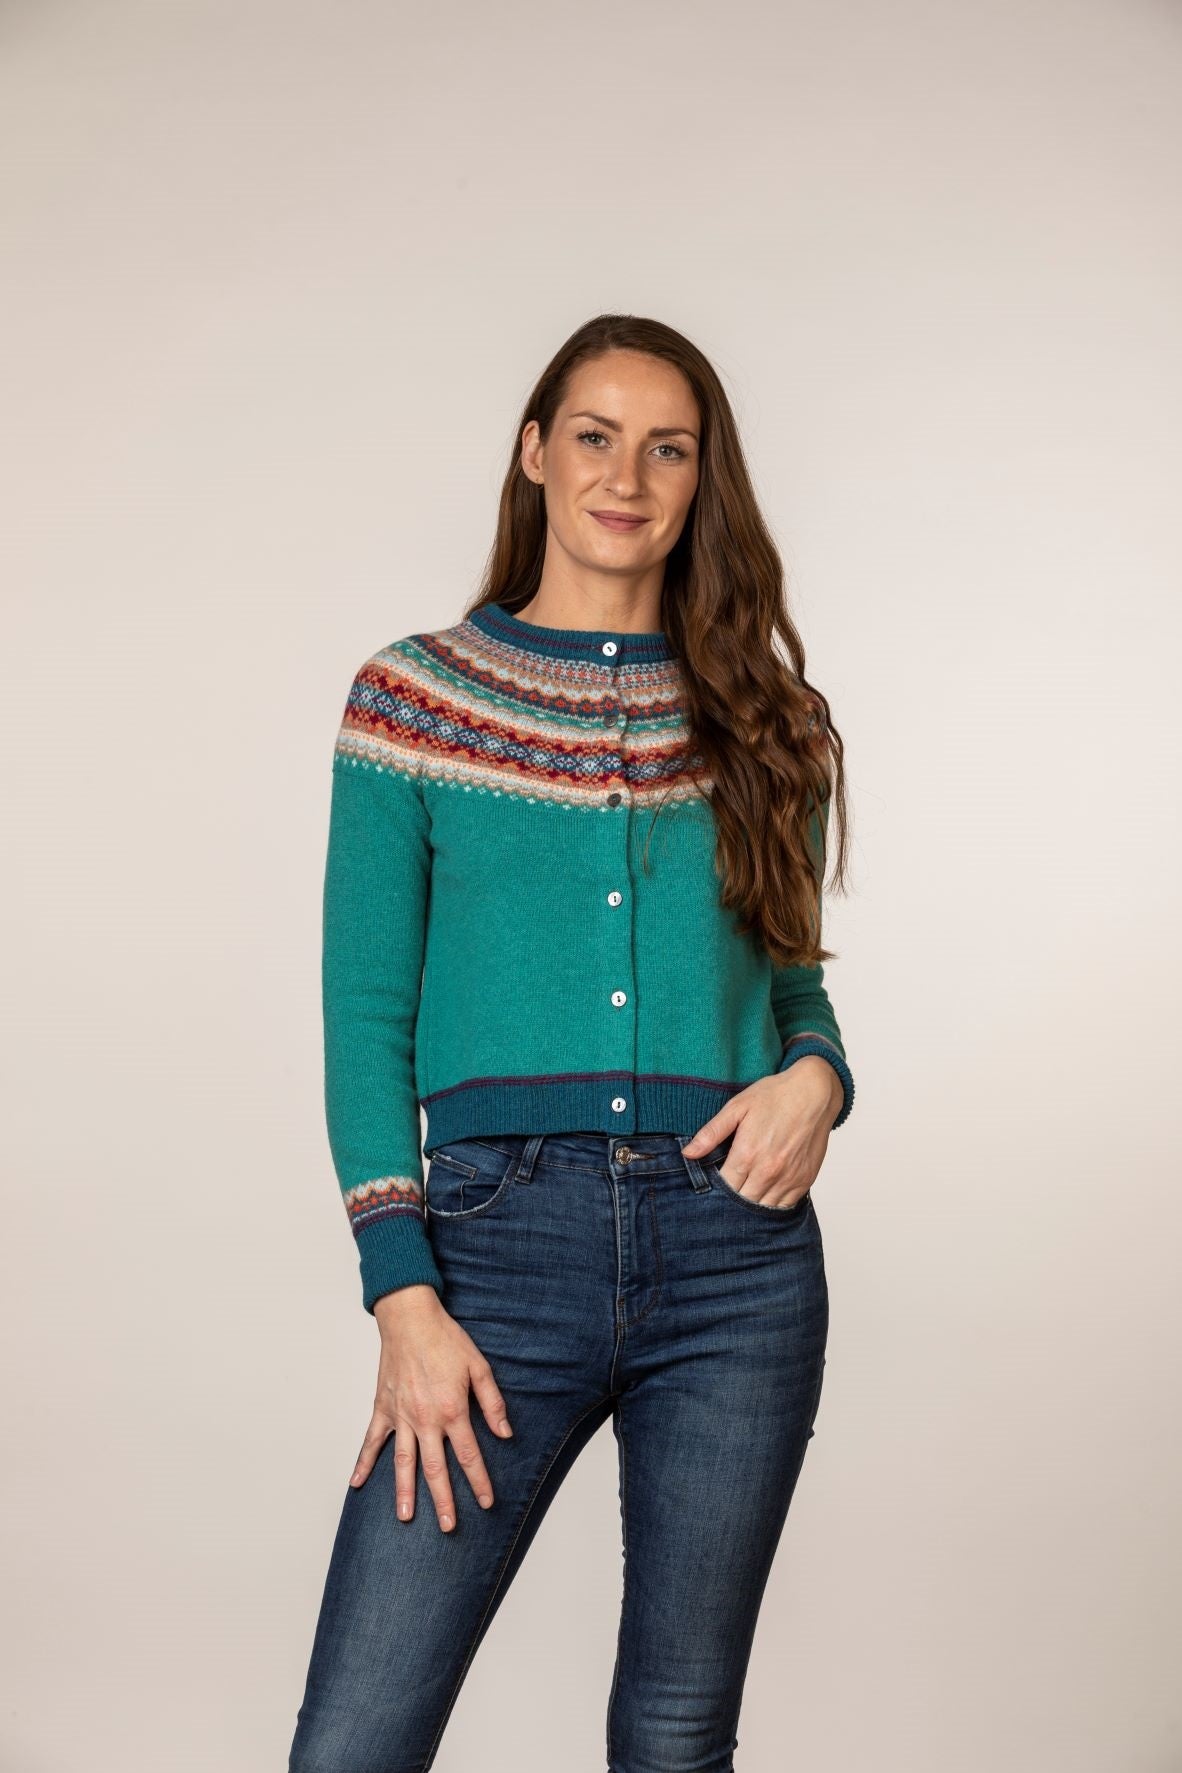 NEW 'Emerald' Alpine Short Cardigan 100% Merino Lambswool designed by ERIBÉ Knitwear